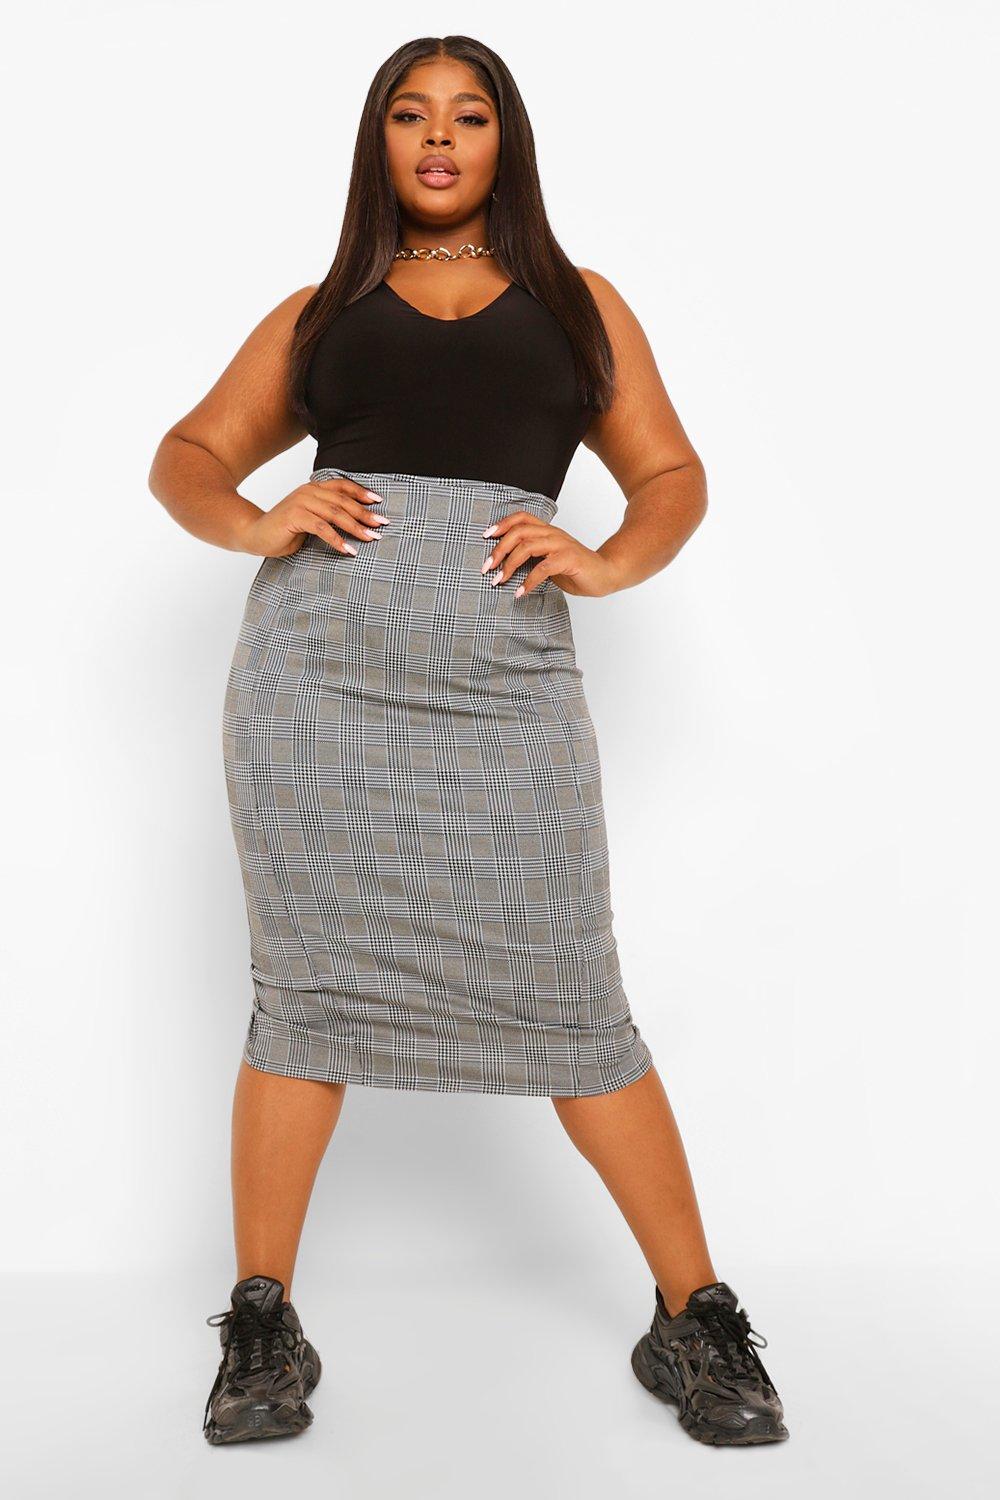 black pencil skirt outfits plus size